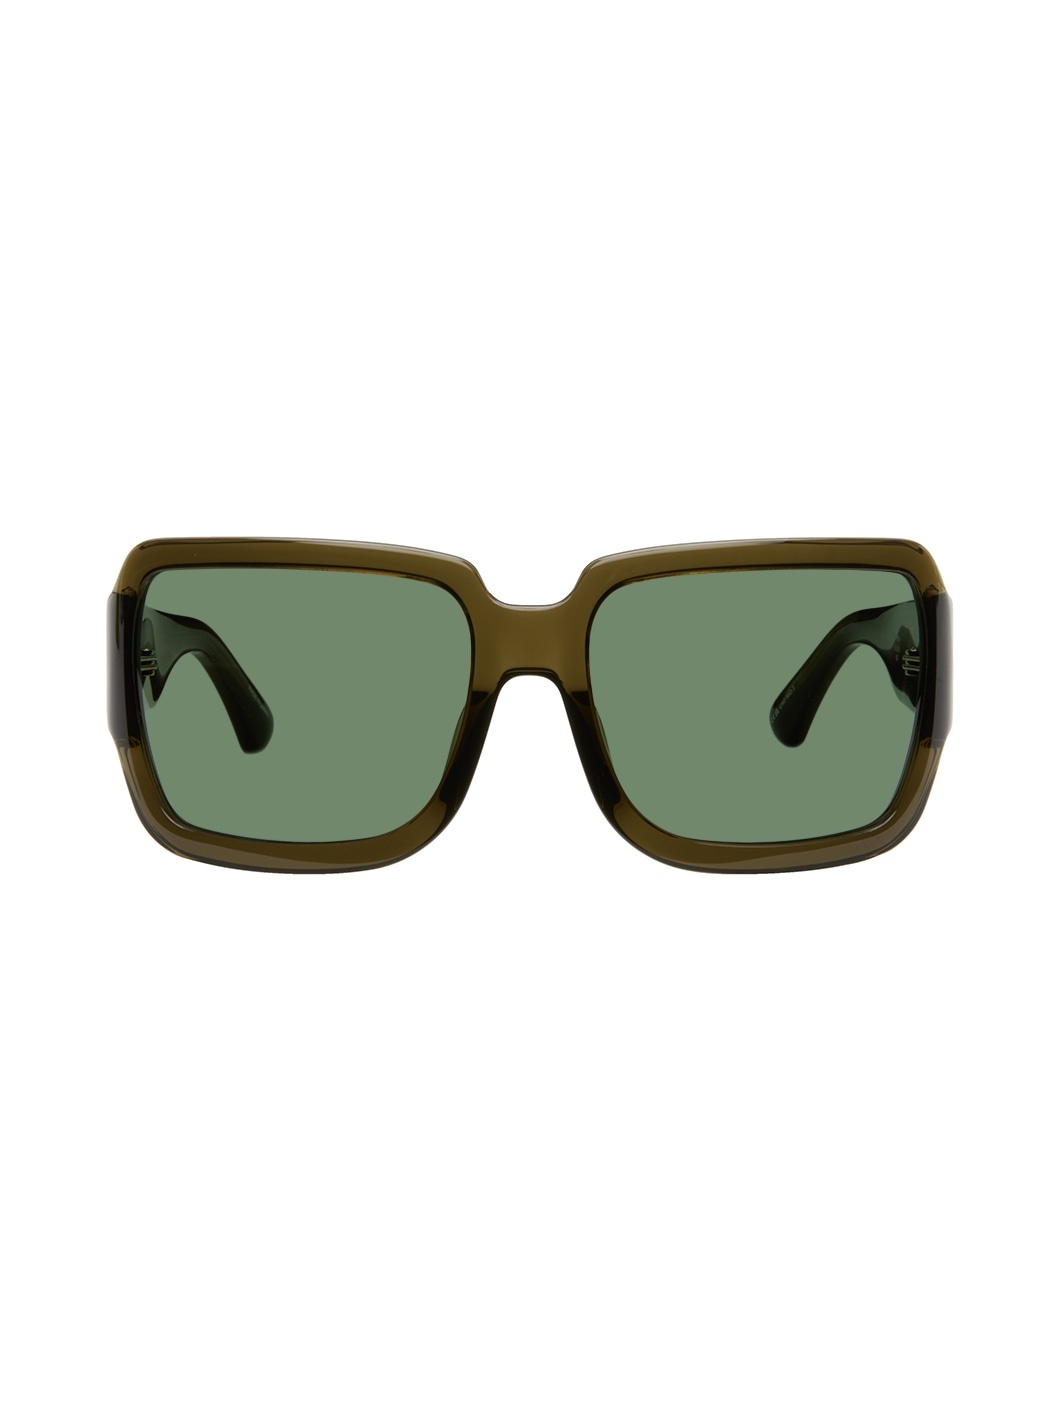 Khaki Linda Farrow Edition Oversized Sunglasses - 1